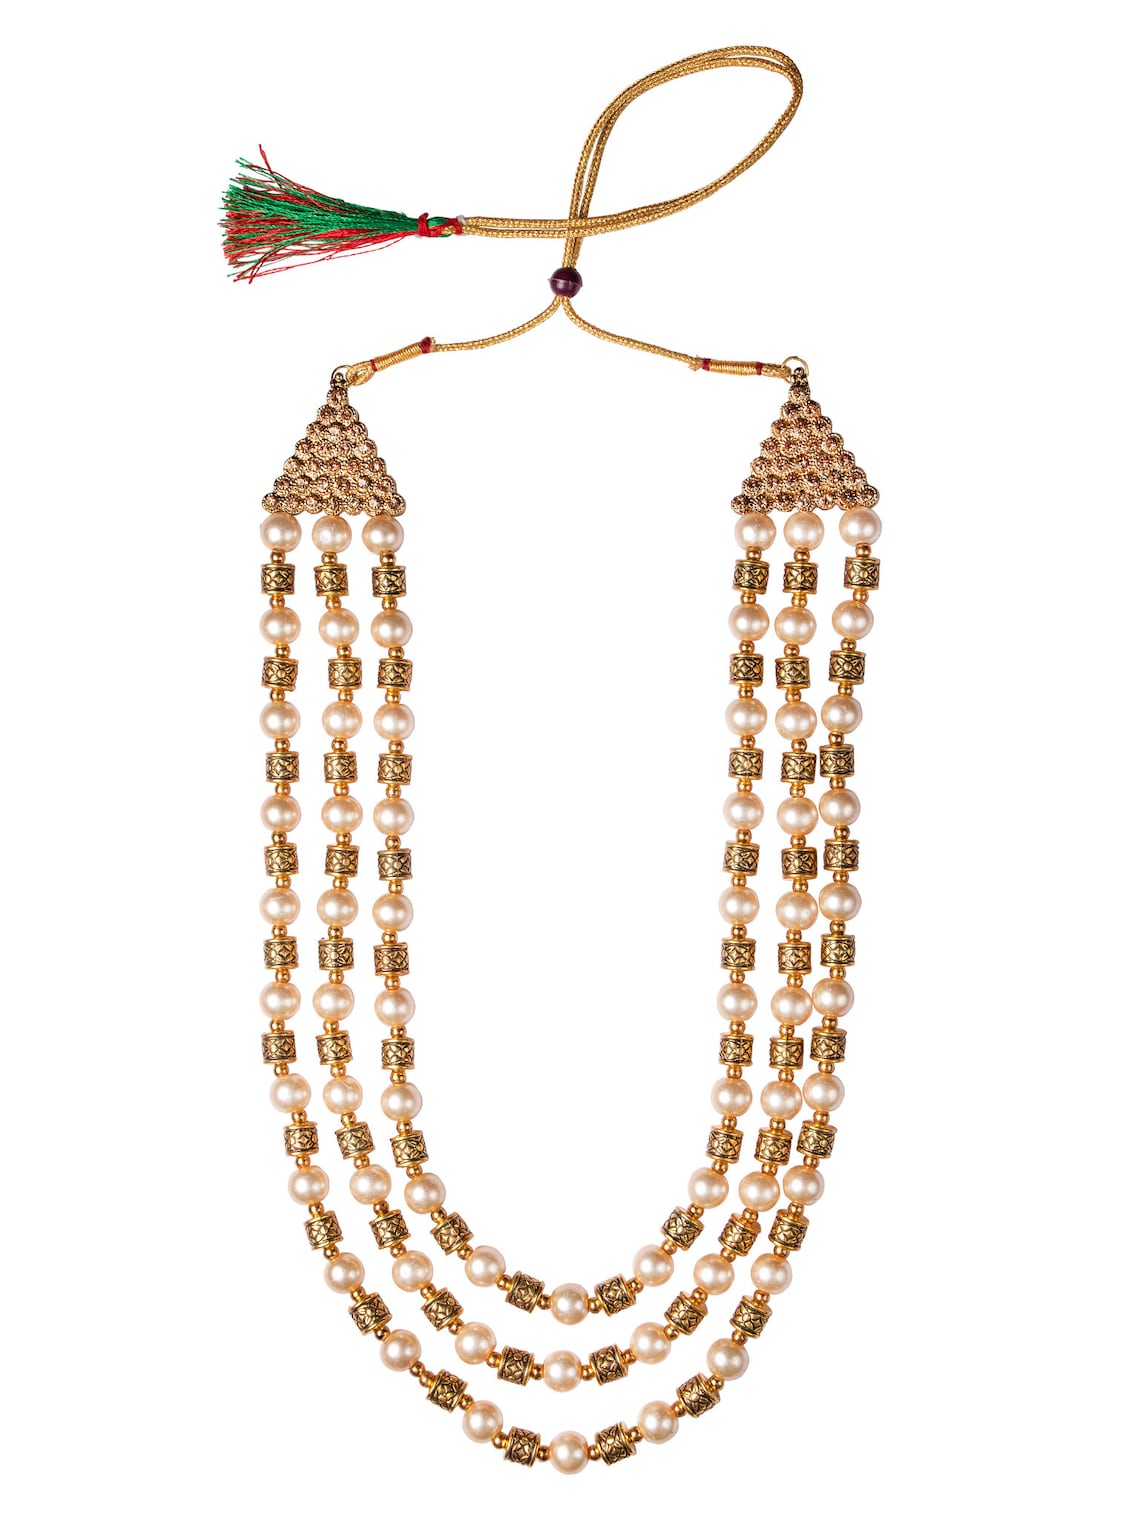 Indian Men Jewelry/ Necklace For Groom/ Sherwani Mala/ | Etsy